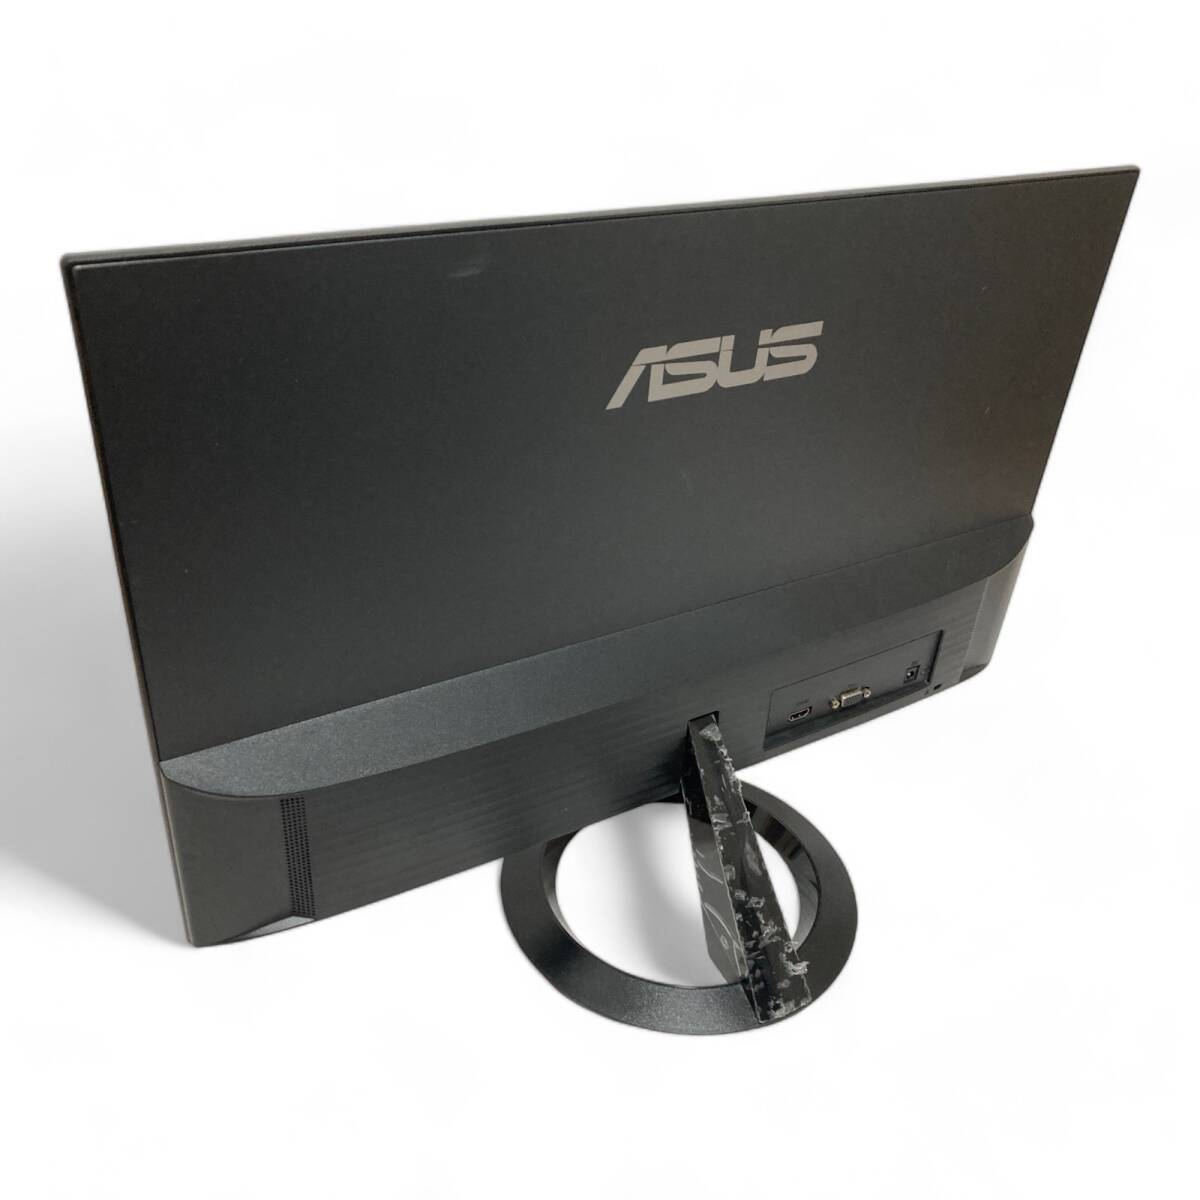 *e chair -s Asus ASUS liquid crystal display VZ249HE black 23.8 wide 54-11